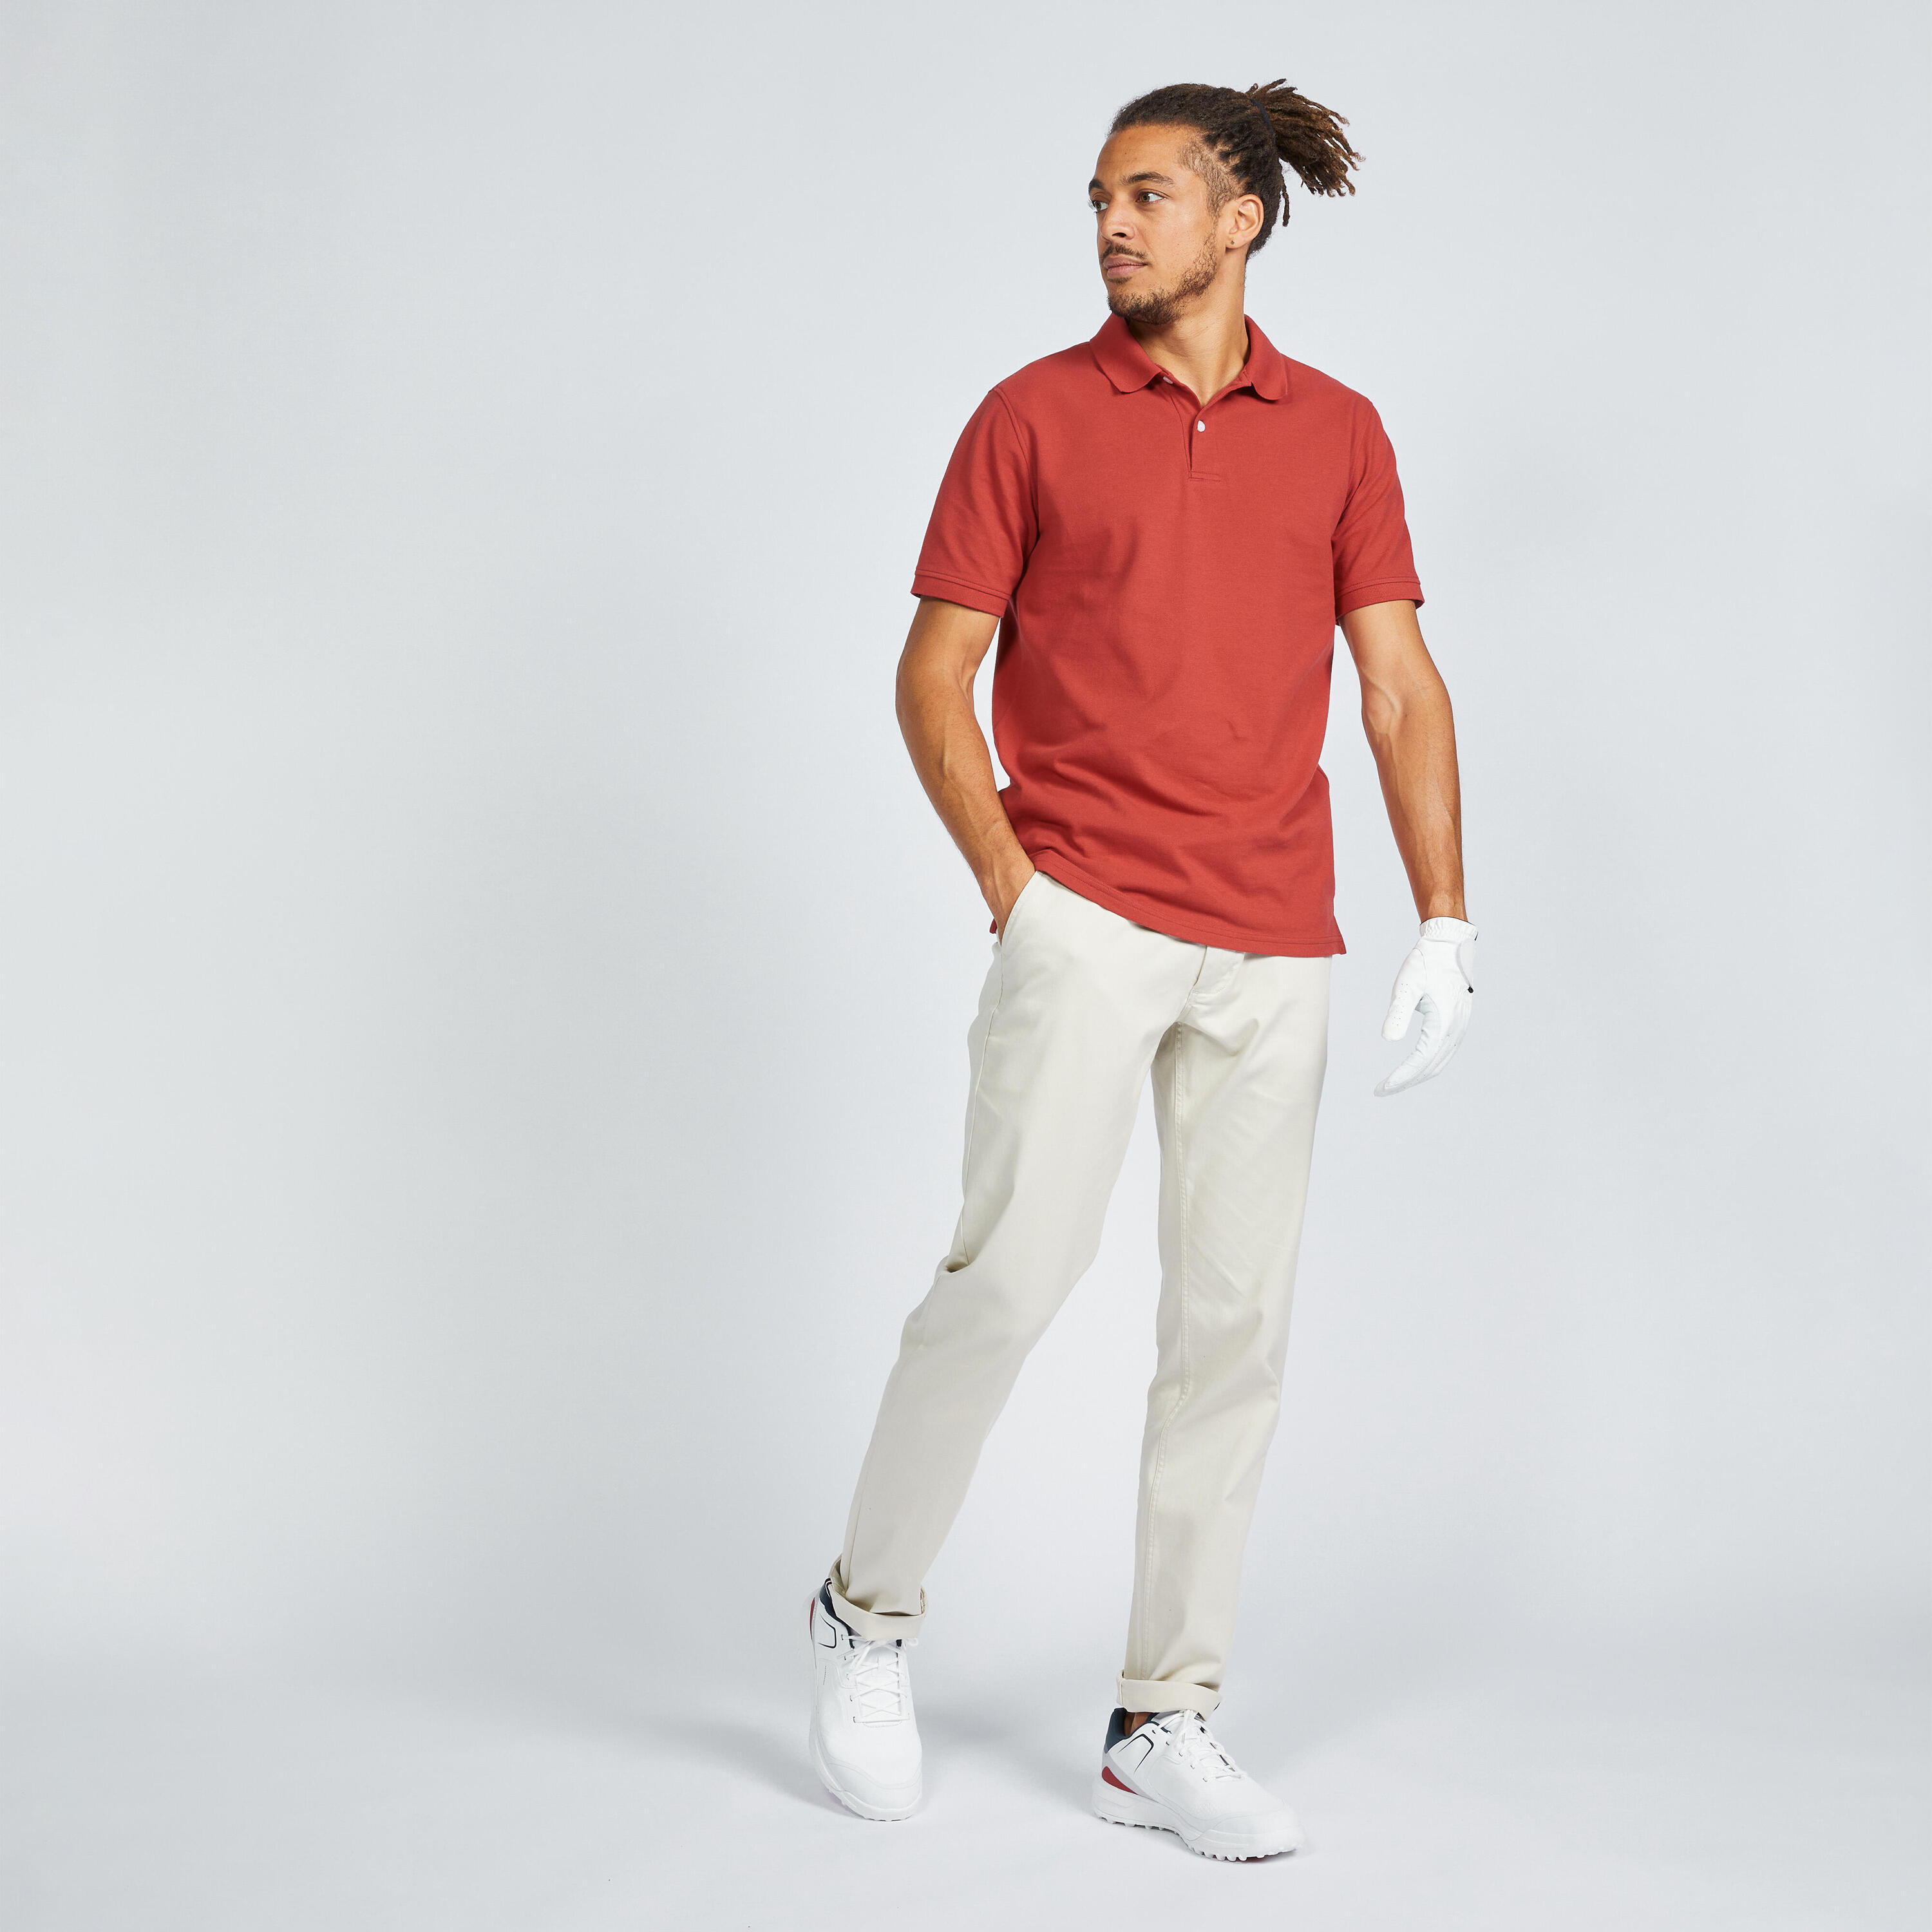 Men's short-sleeved golf polo shirt - MW500 dark red 2/5